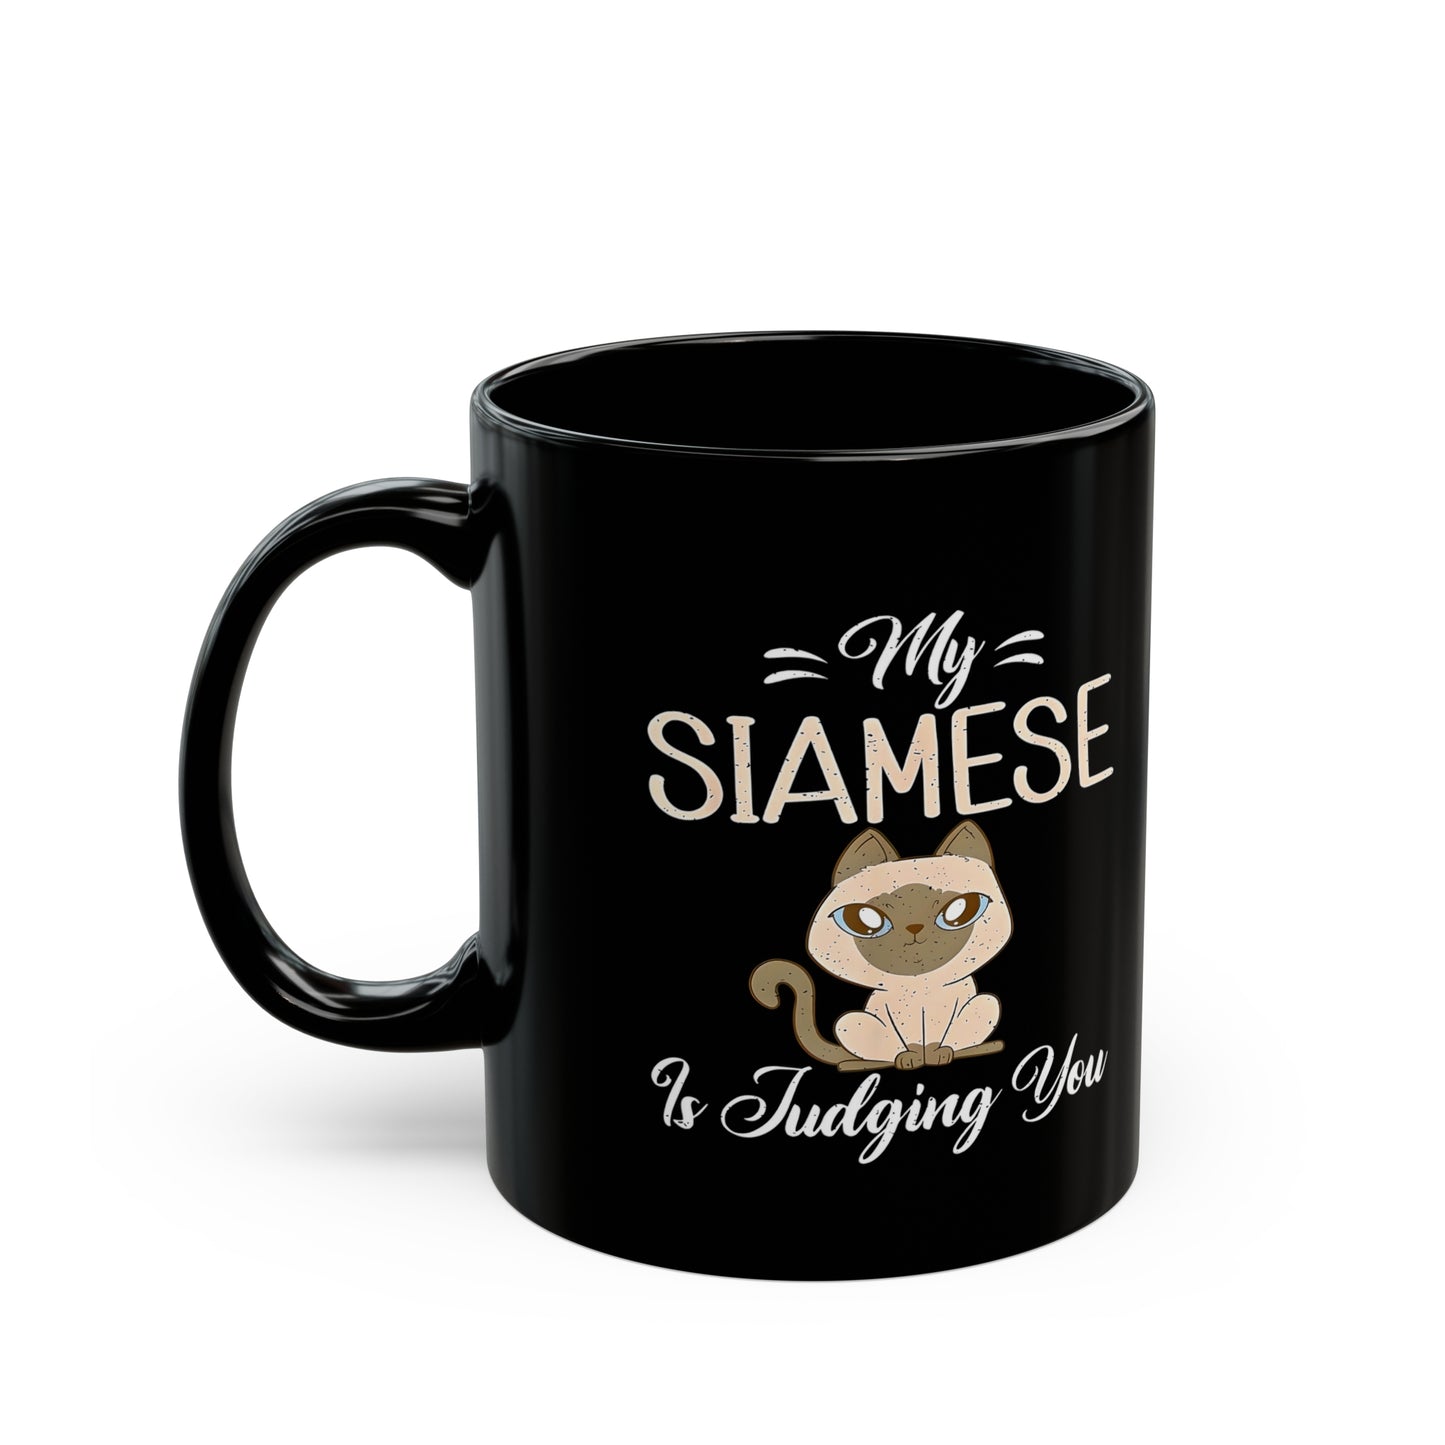 "My Siamese is Judging You" Black Mug 11oz